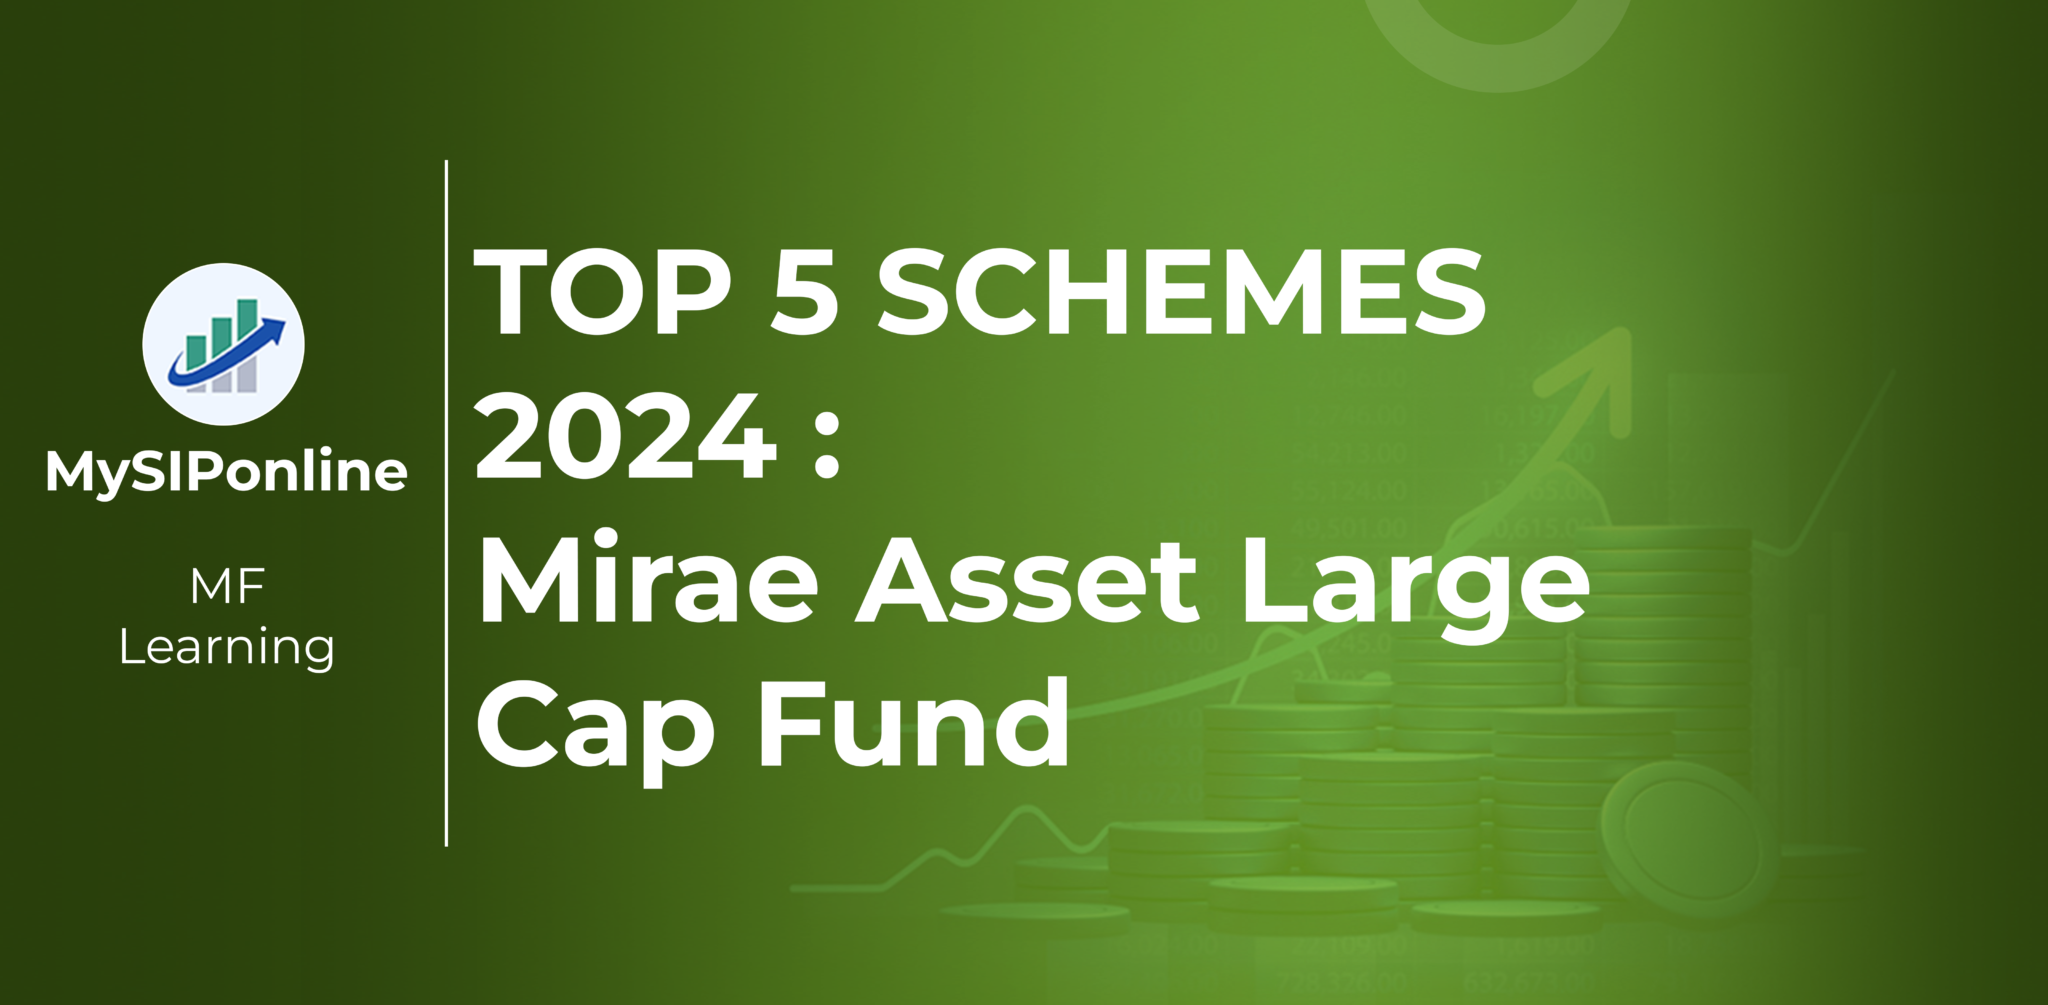 TOP 5 SCHEMES 2024 Mirae Asset Large Cap Fund